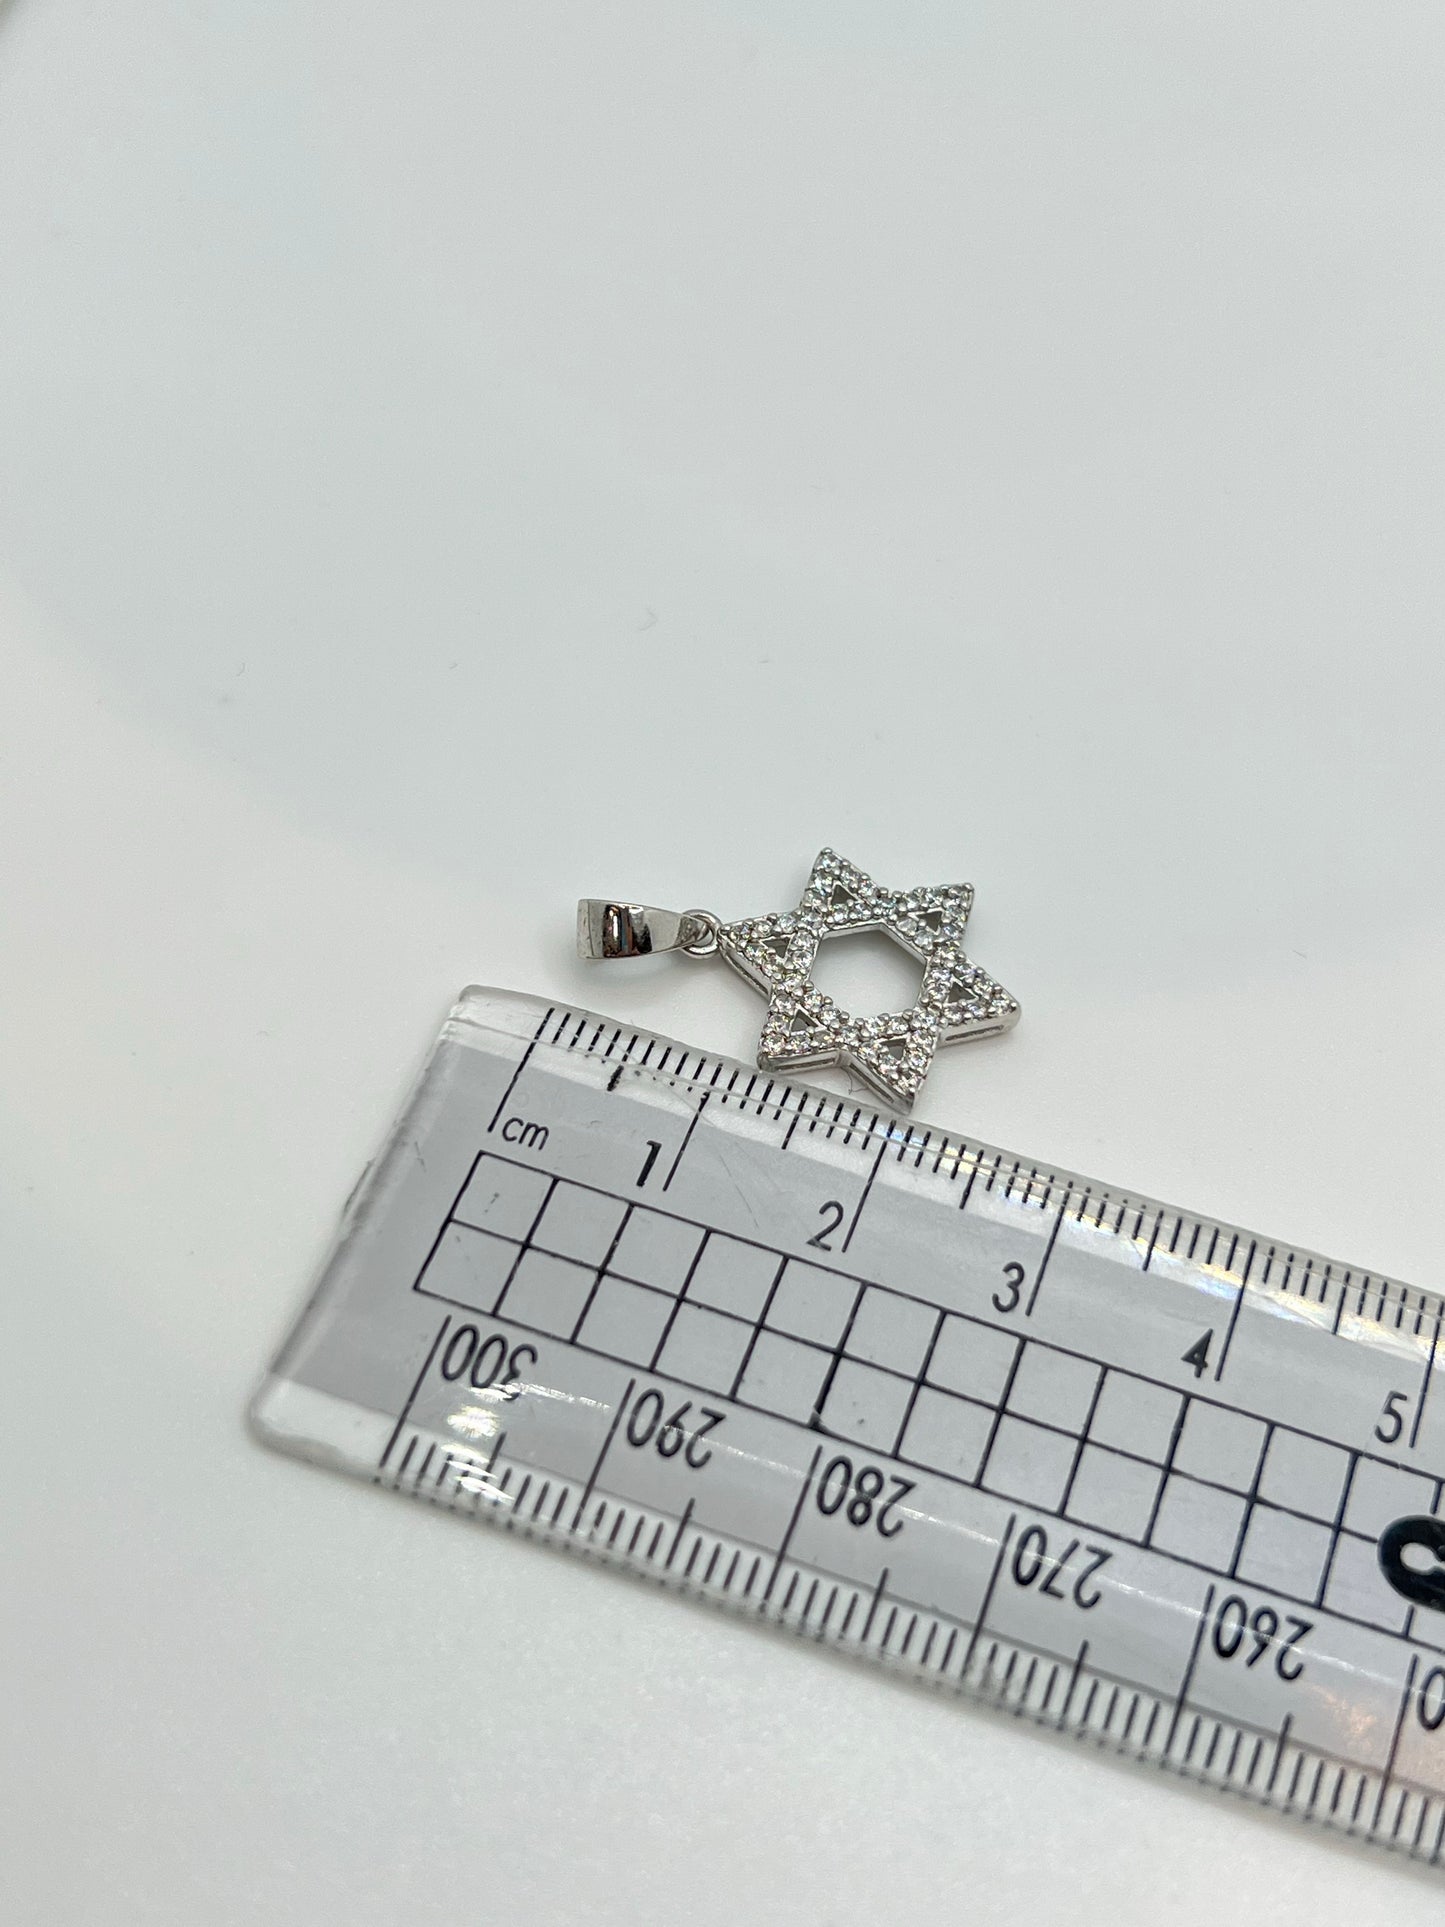 Real silver star of David pendant